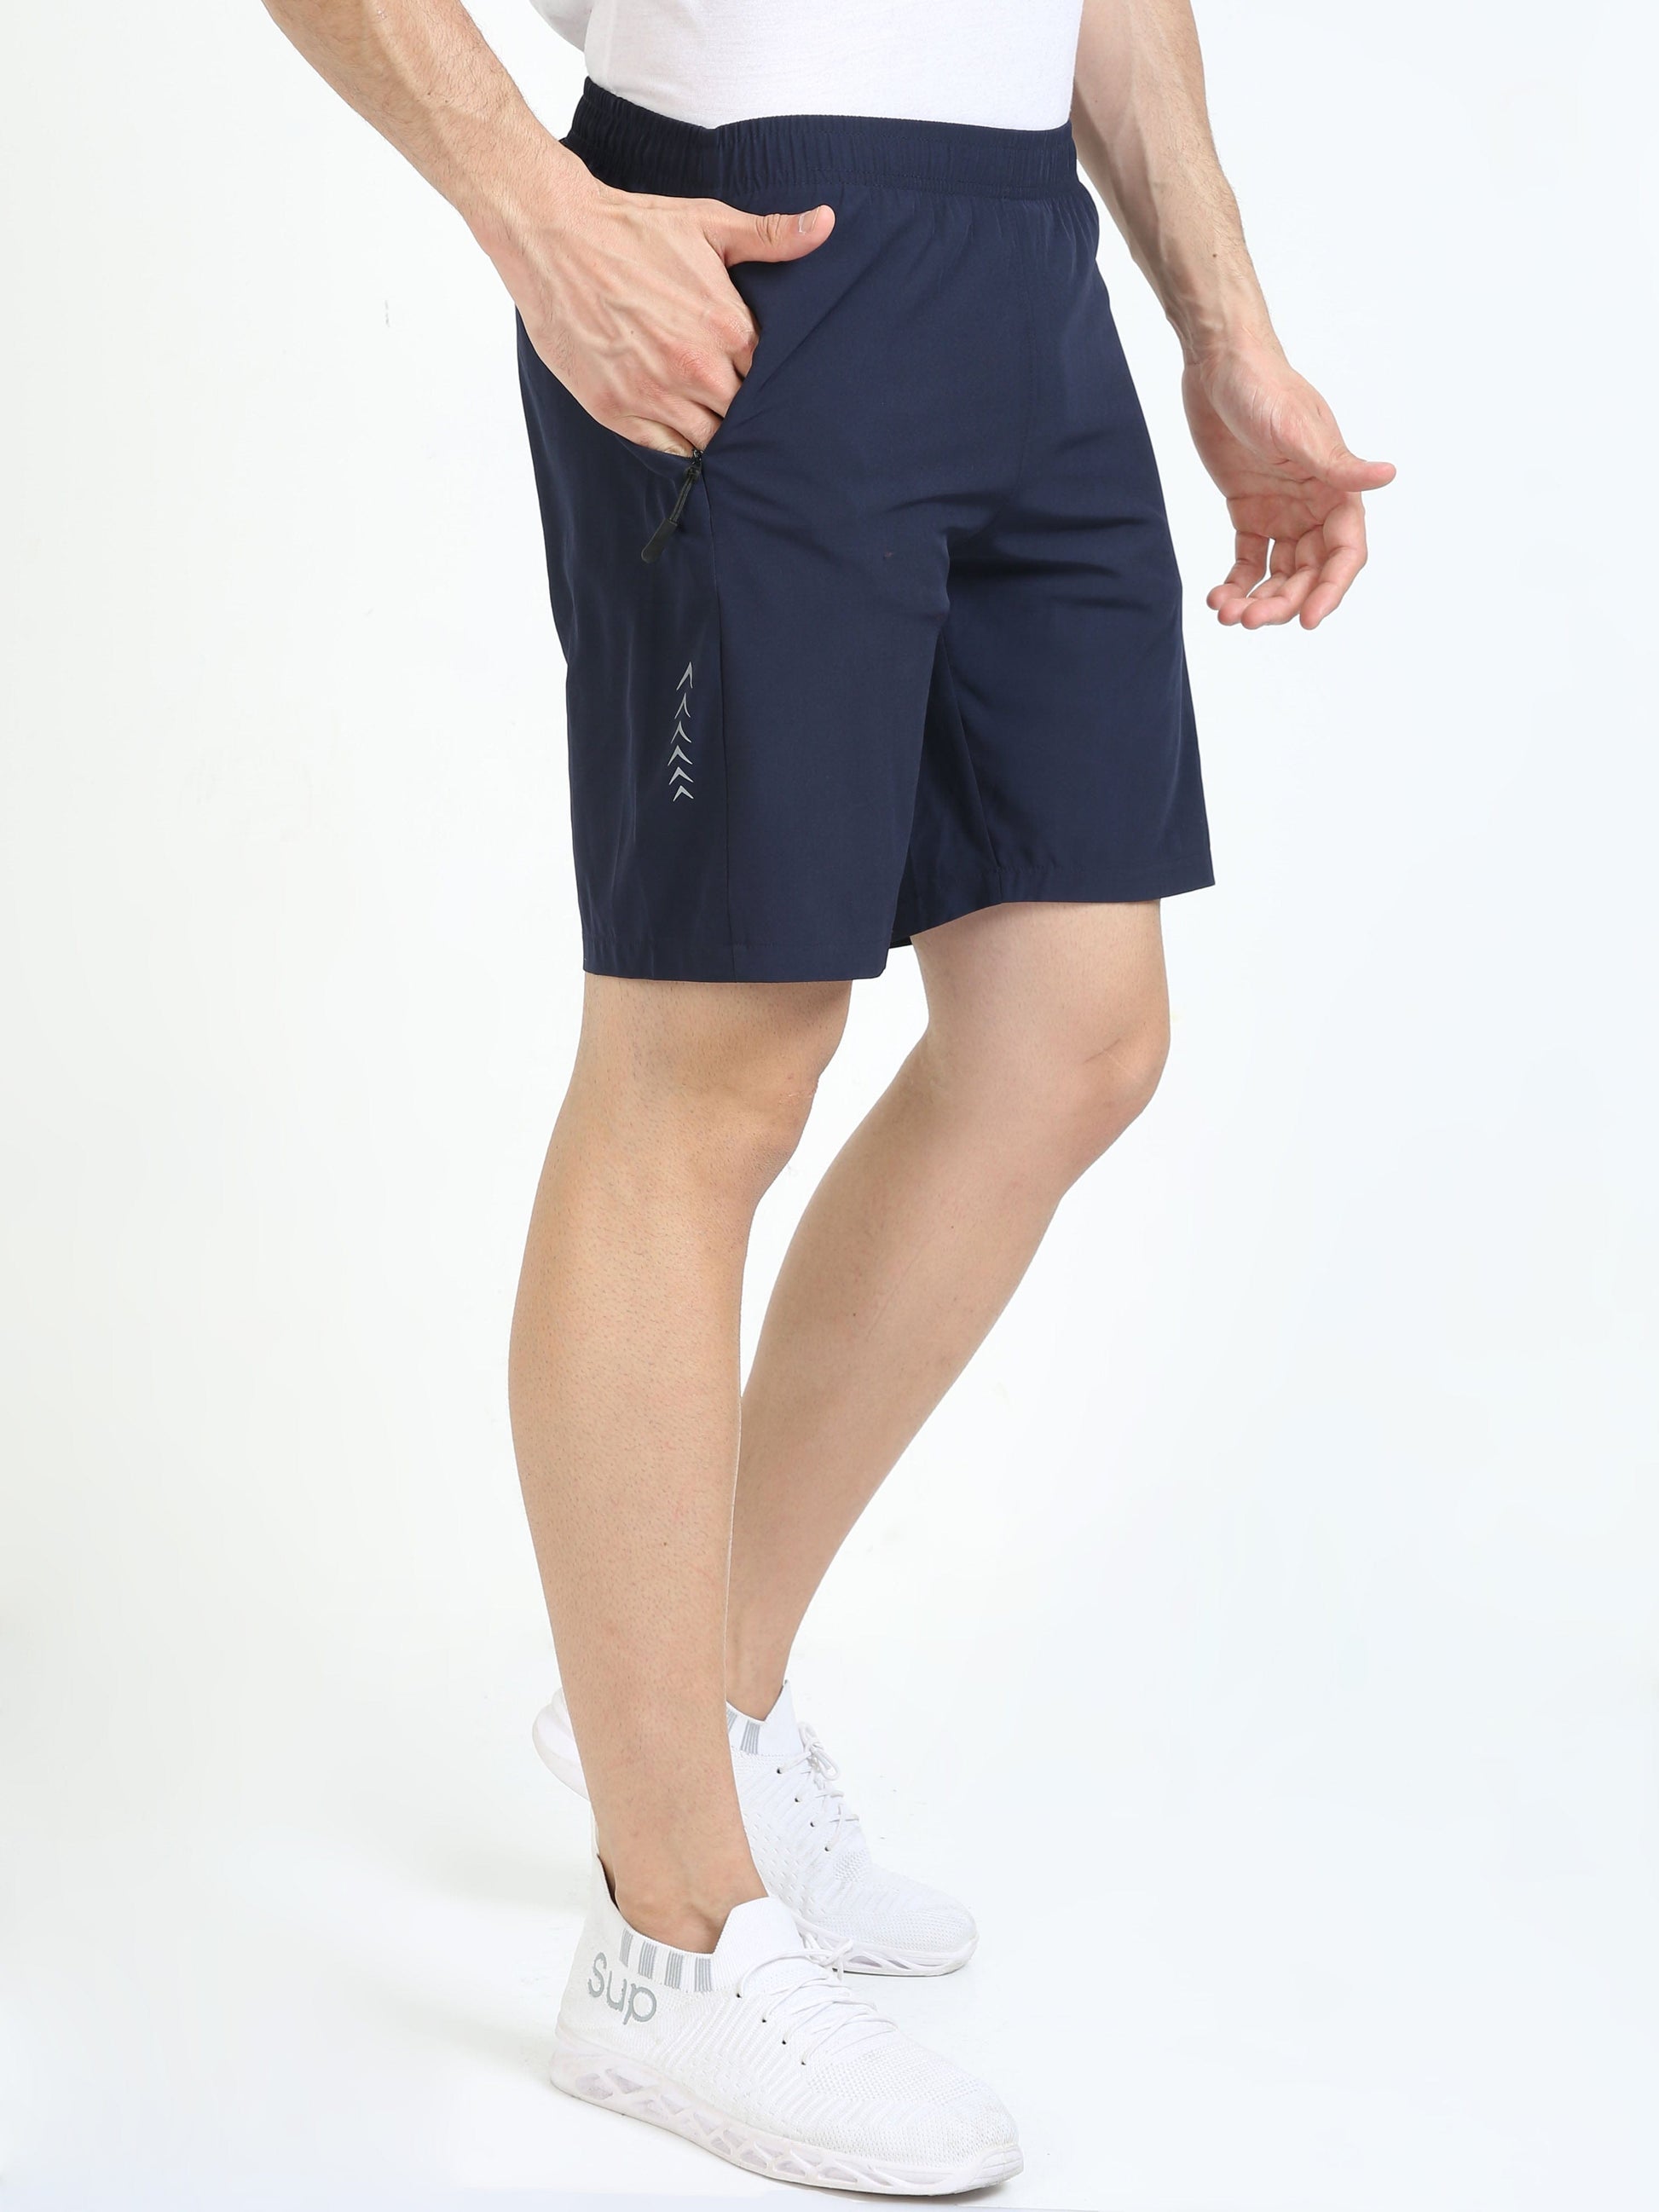 Mirage Sports shorts